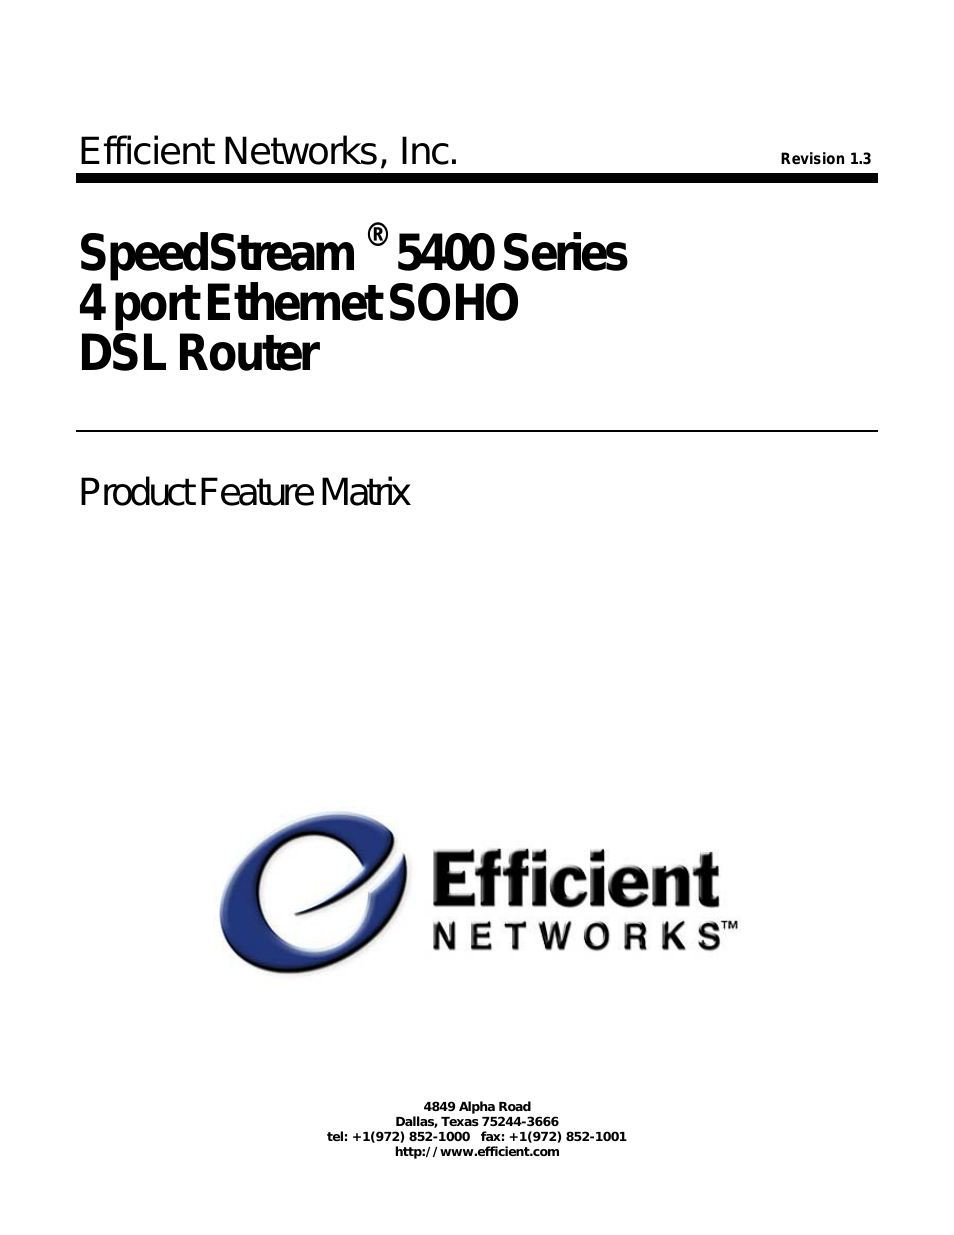 SpeedStream 5400 Series